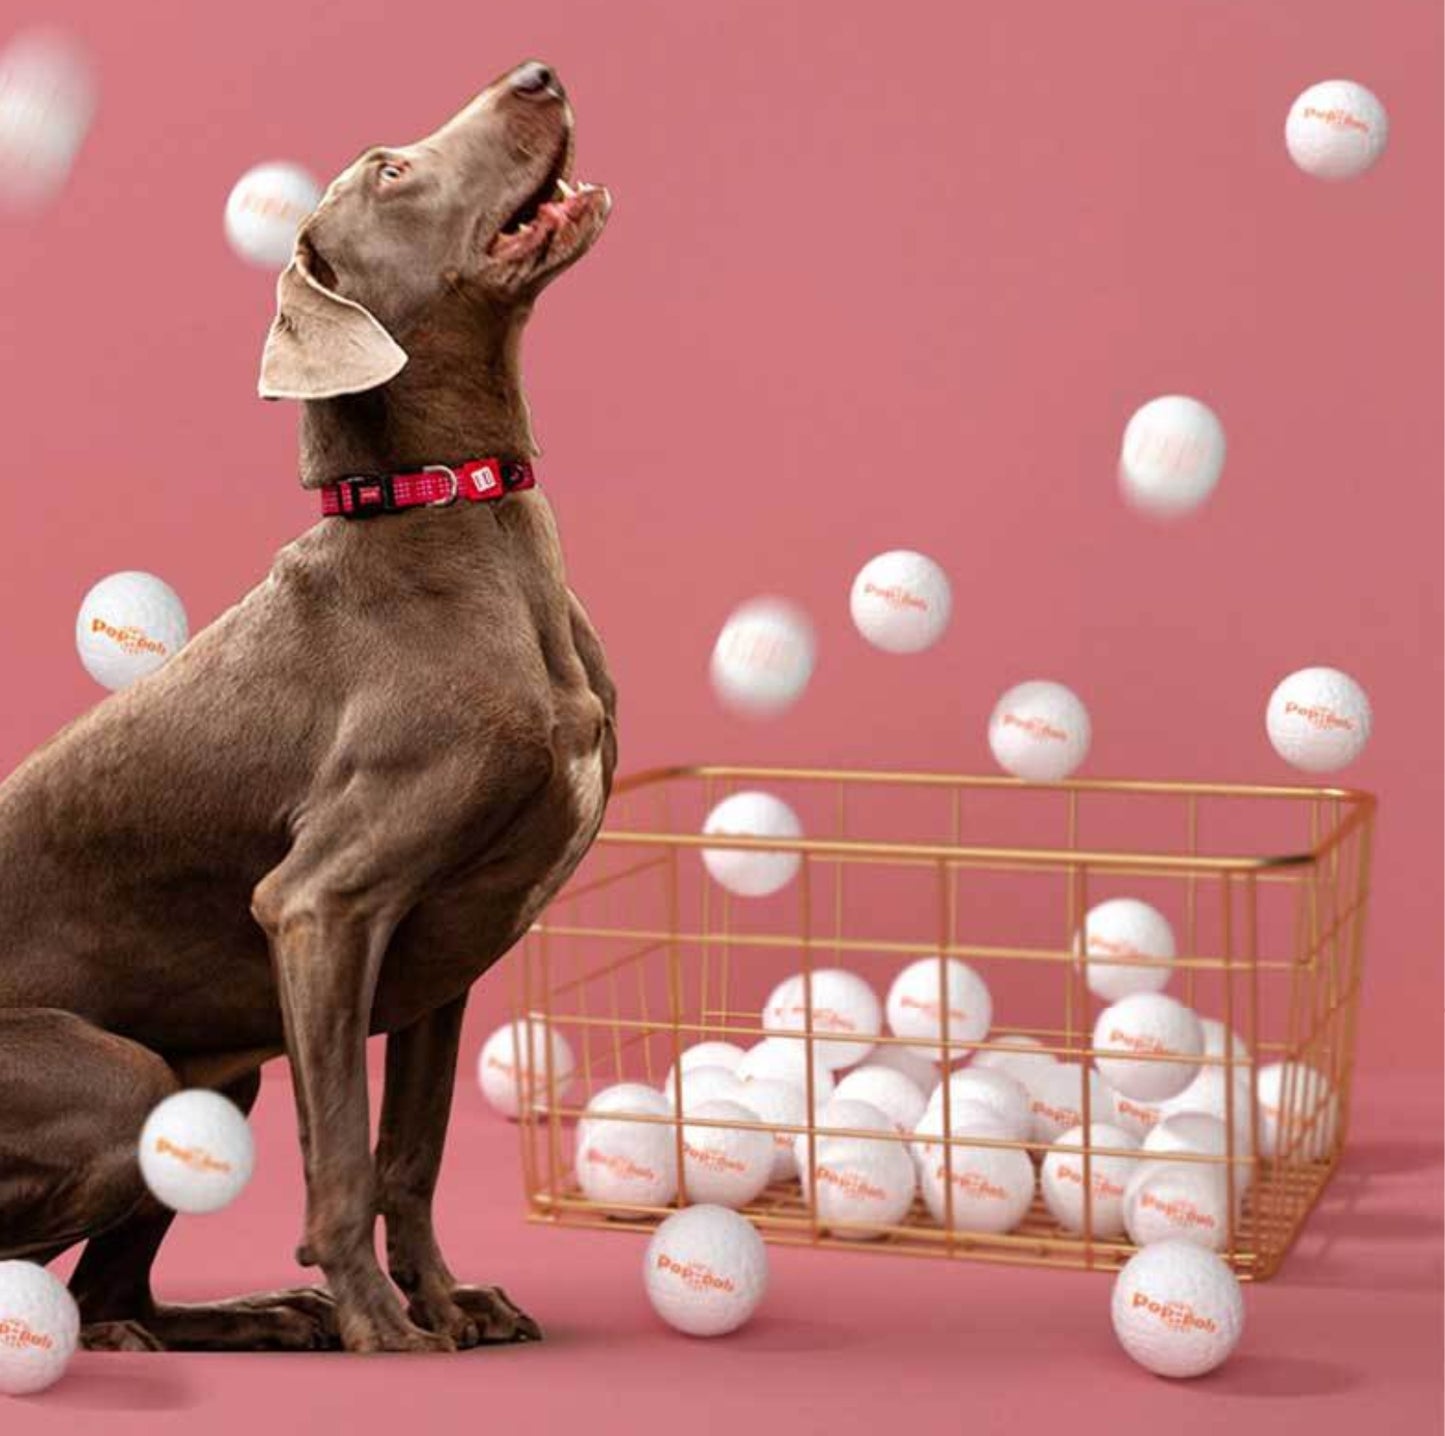 GiGwi Pop Pals - Hybrid Ball Dog Toy